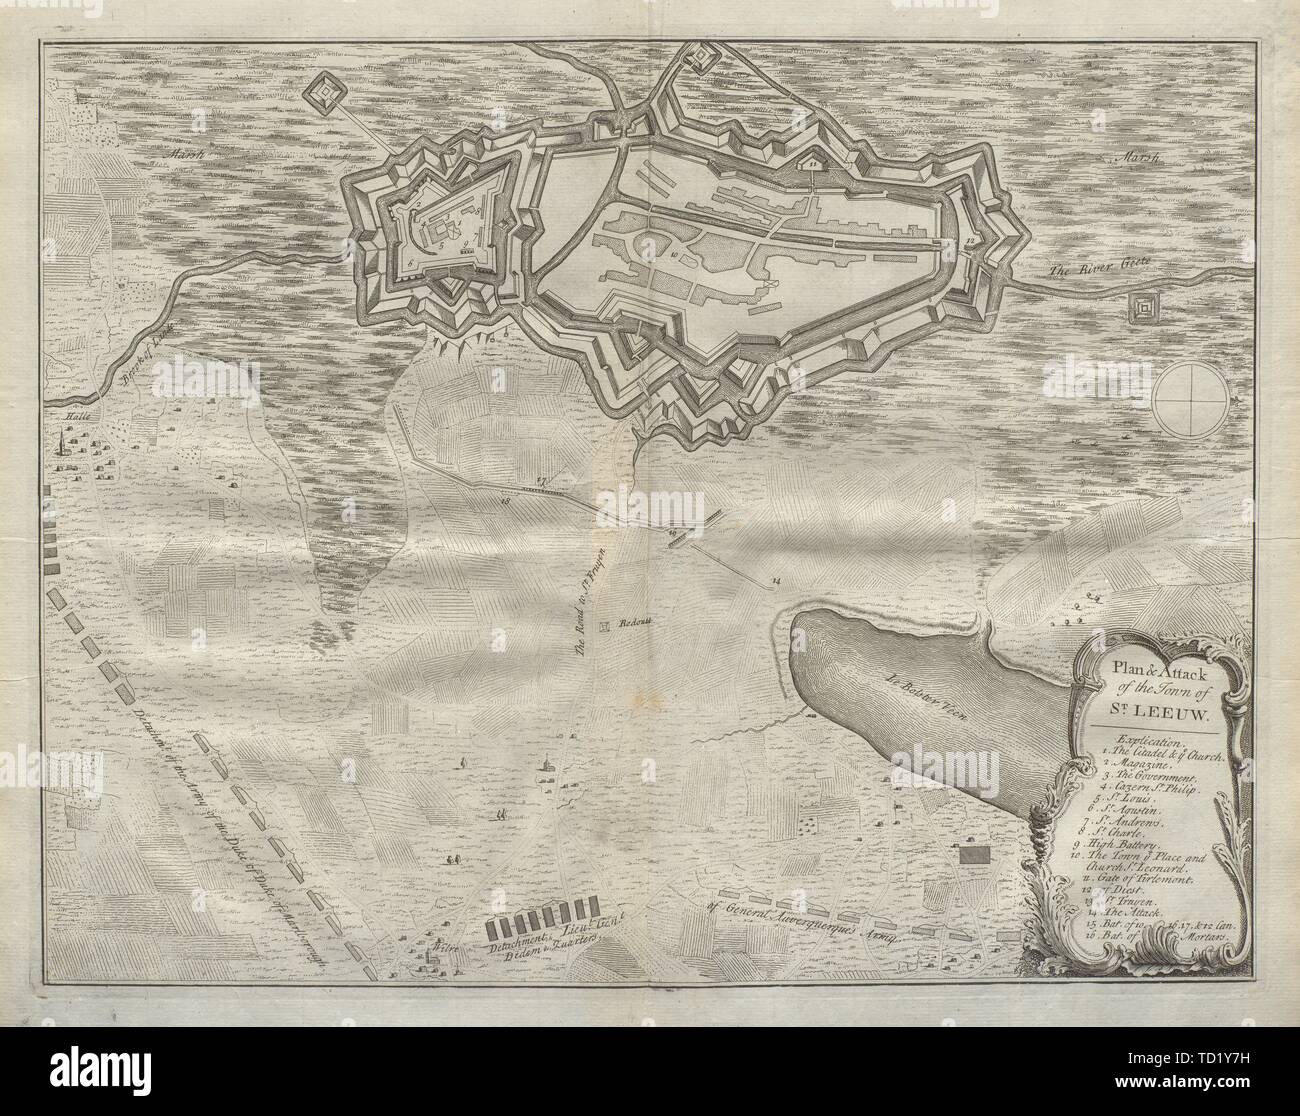 Plan des Angriffs auf die Stadt St. Leeuw. Zoutleeuw, Belgien. DU BOSC 1736 Karte Stockfoto